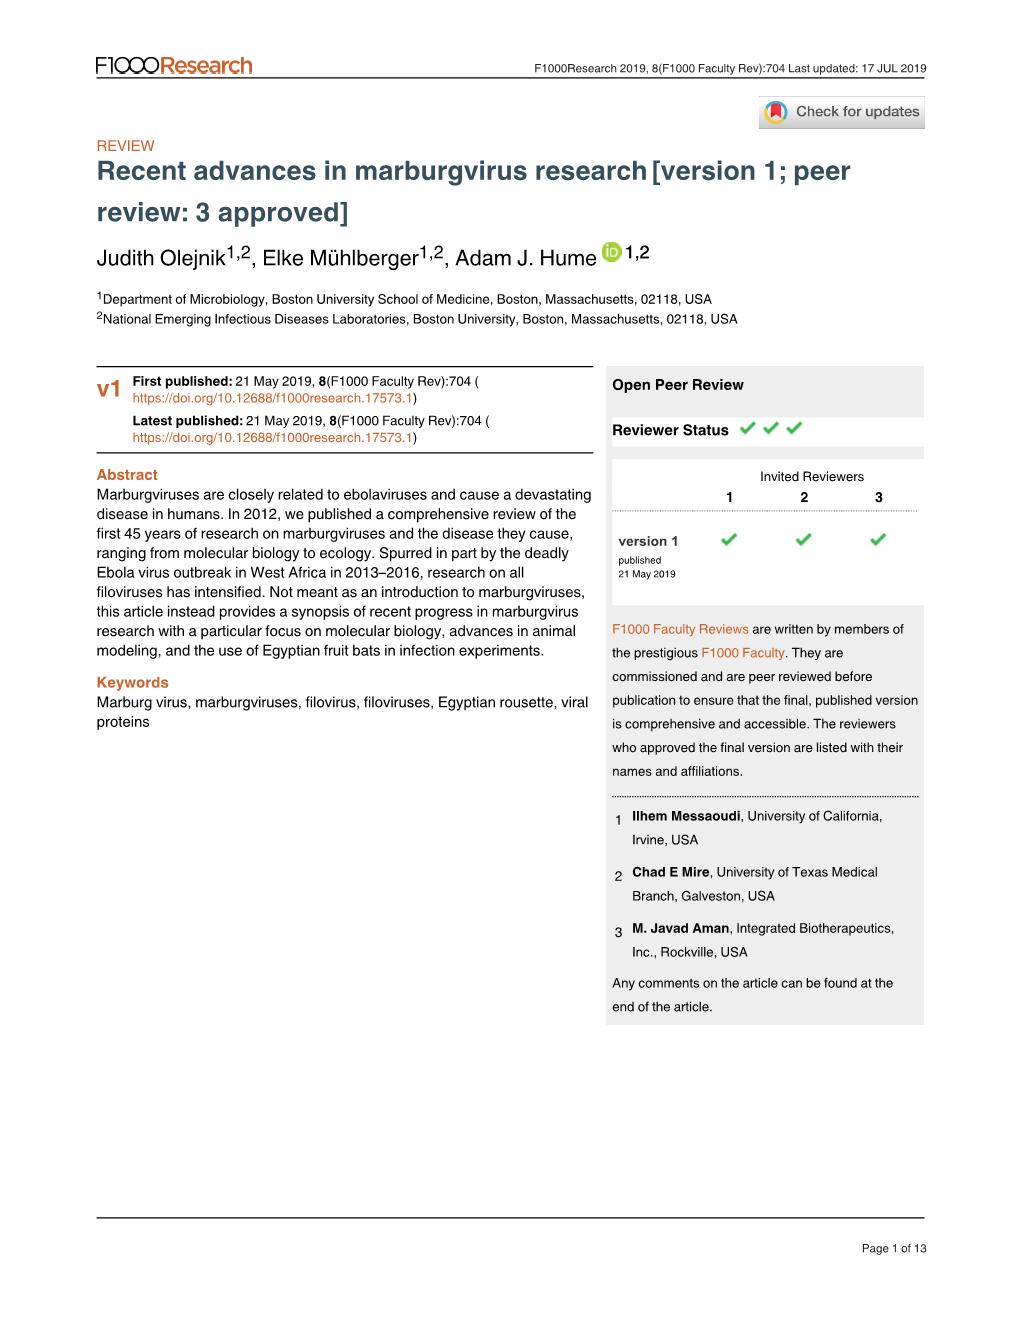 Recent Advances in Marburgvirus Research[Version 1; Peer Review: 3